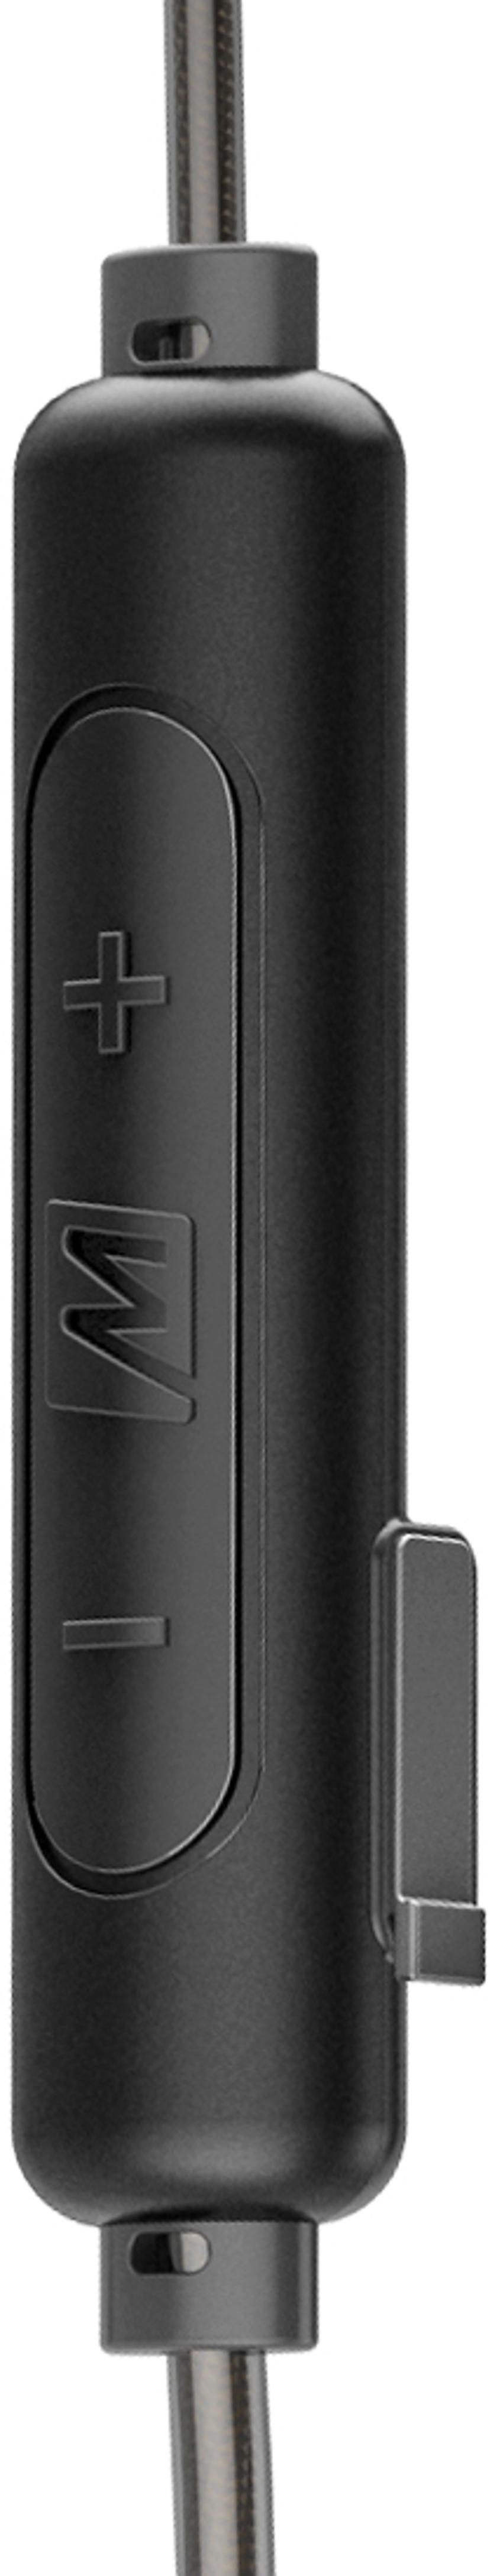 Mee Audio BTX2 Universal Wireless Adapter